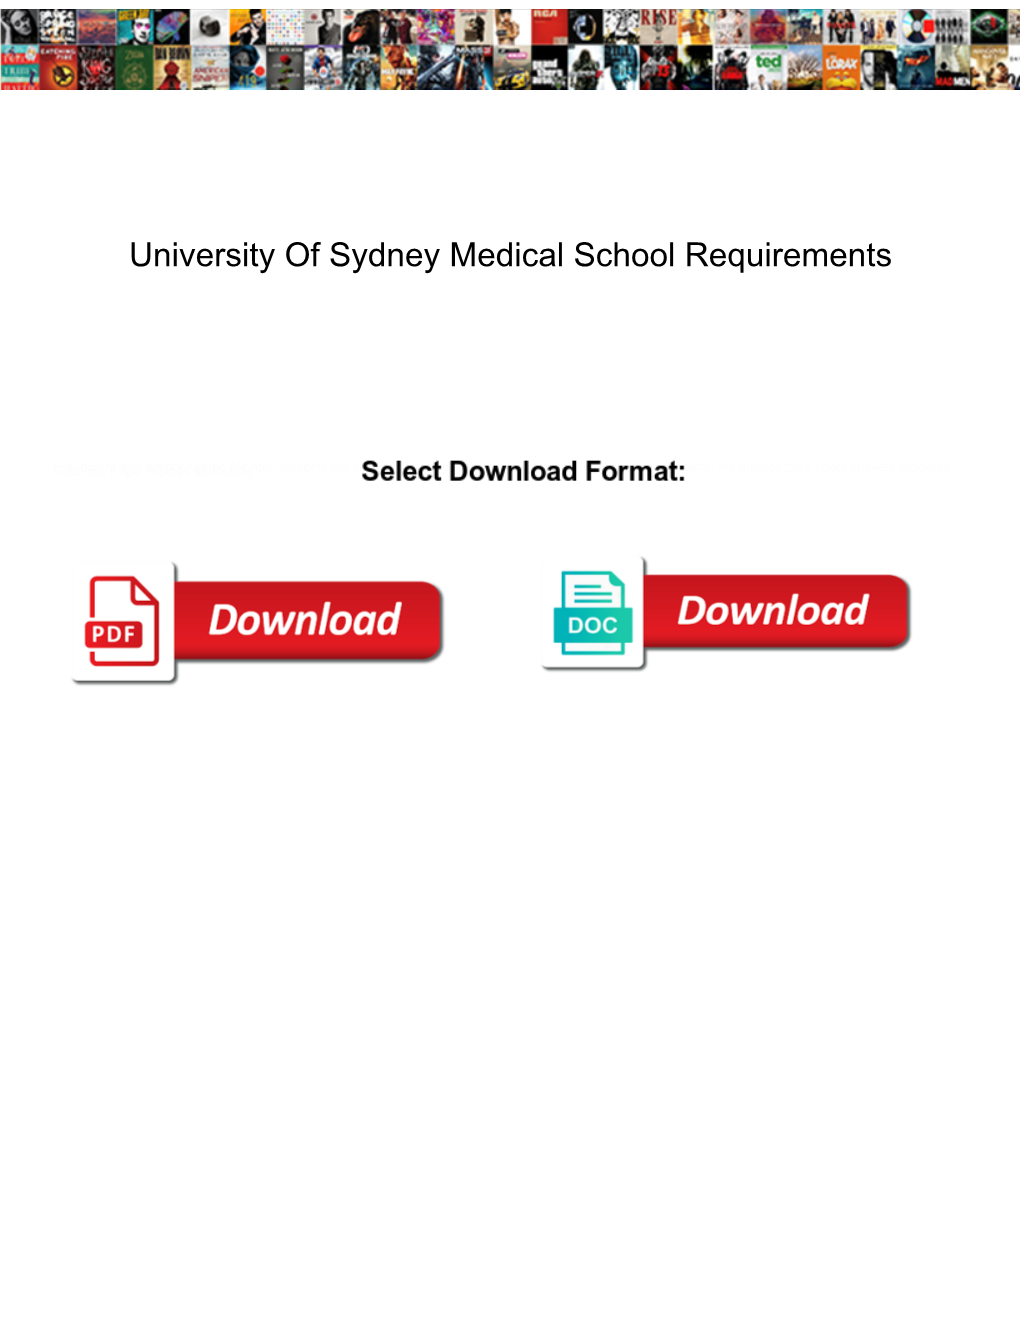 University of Sydney Medical School Requirements